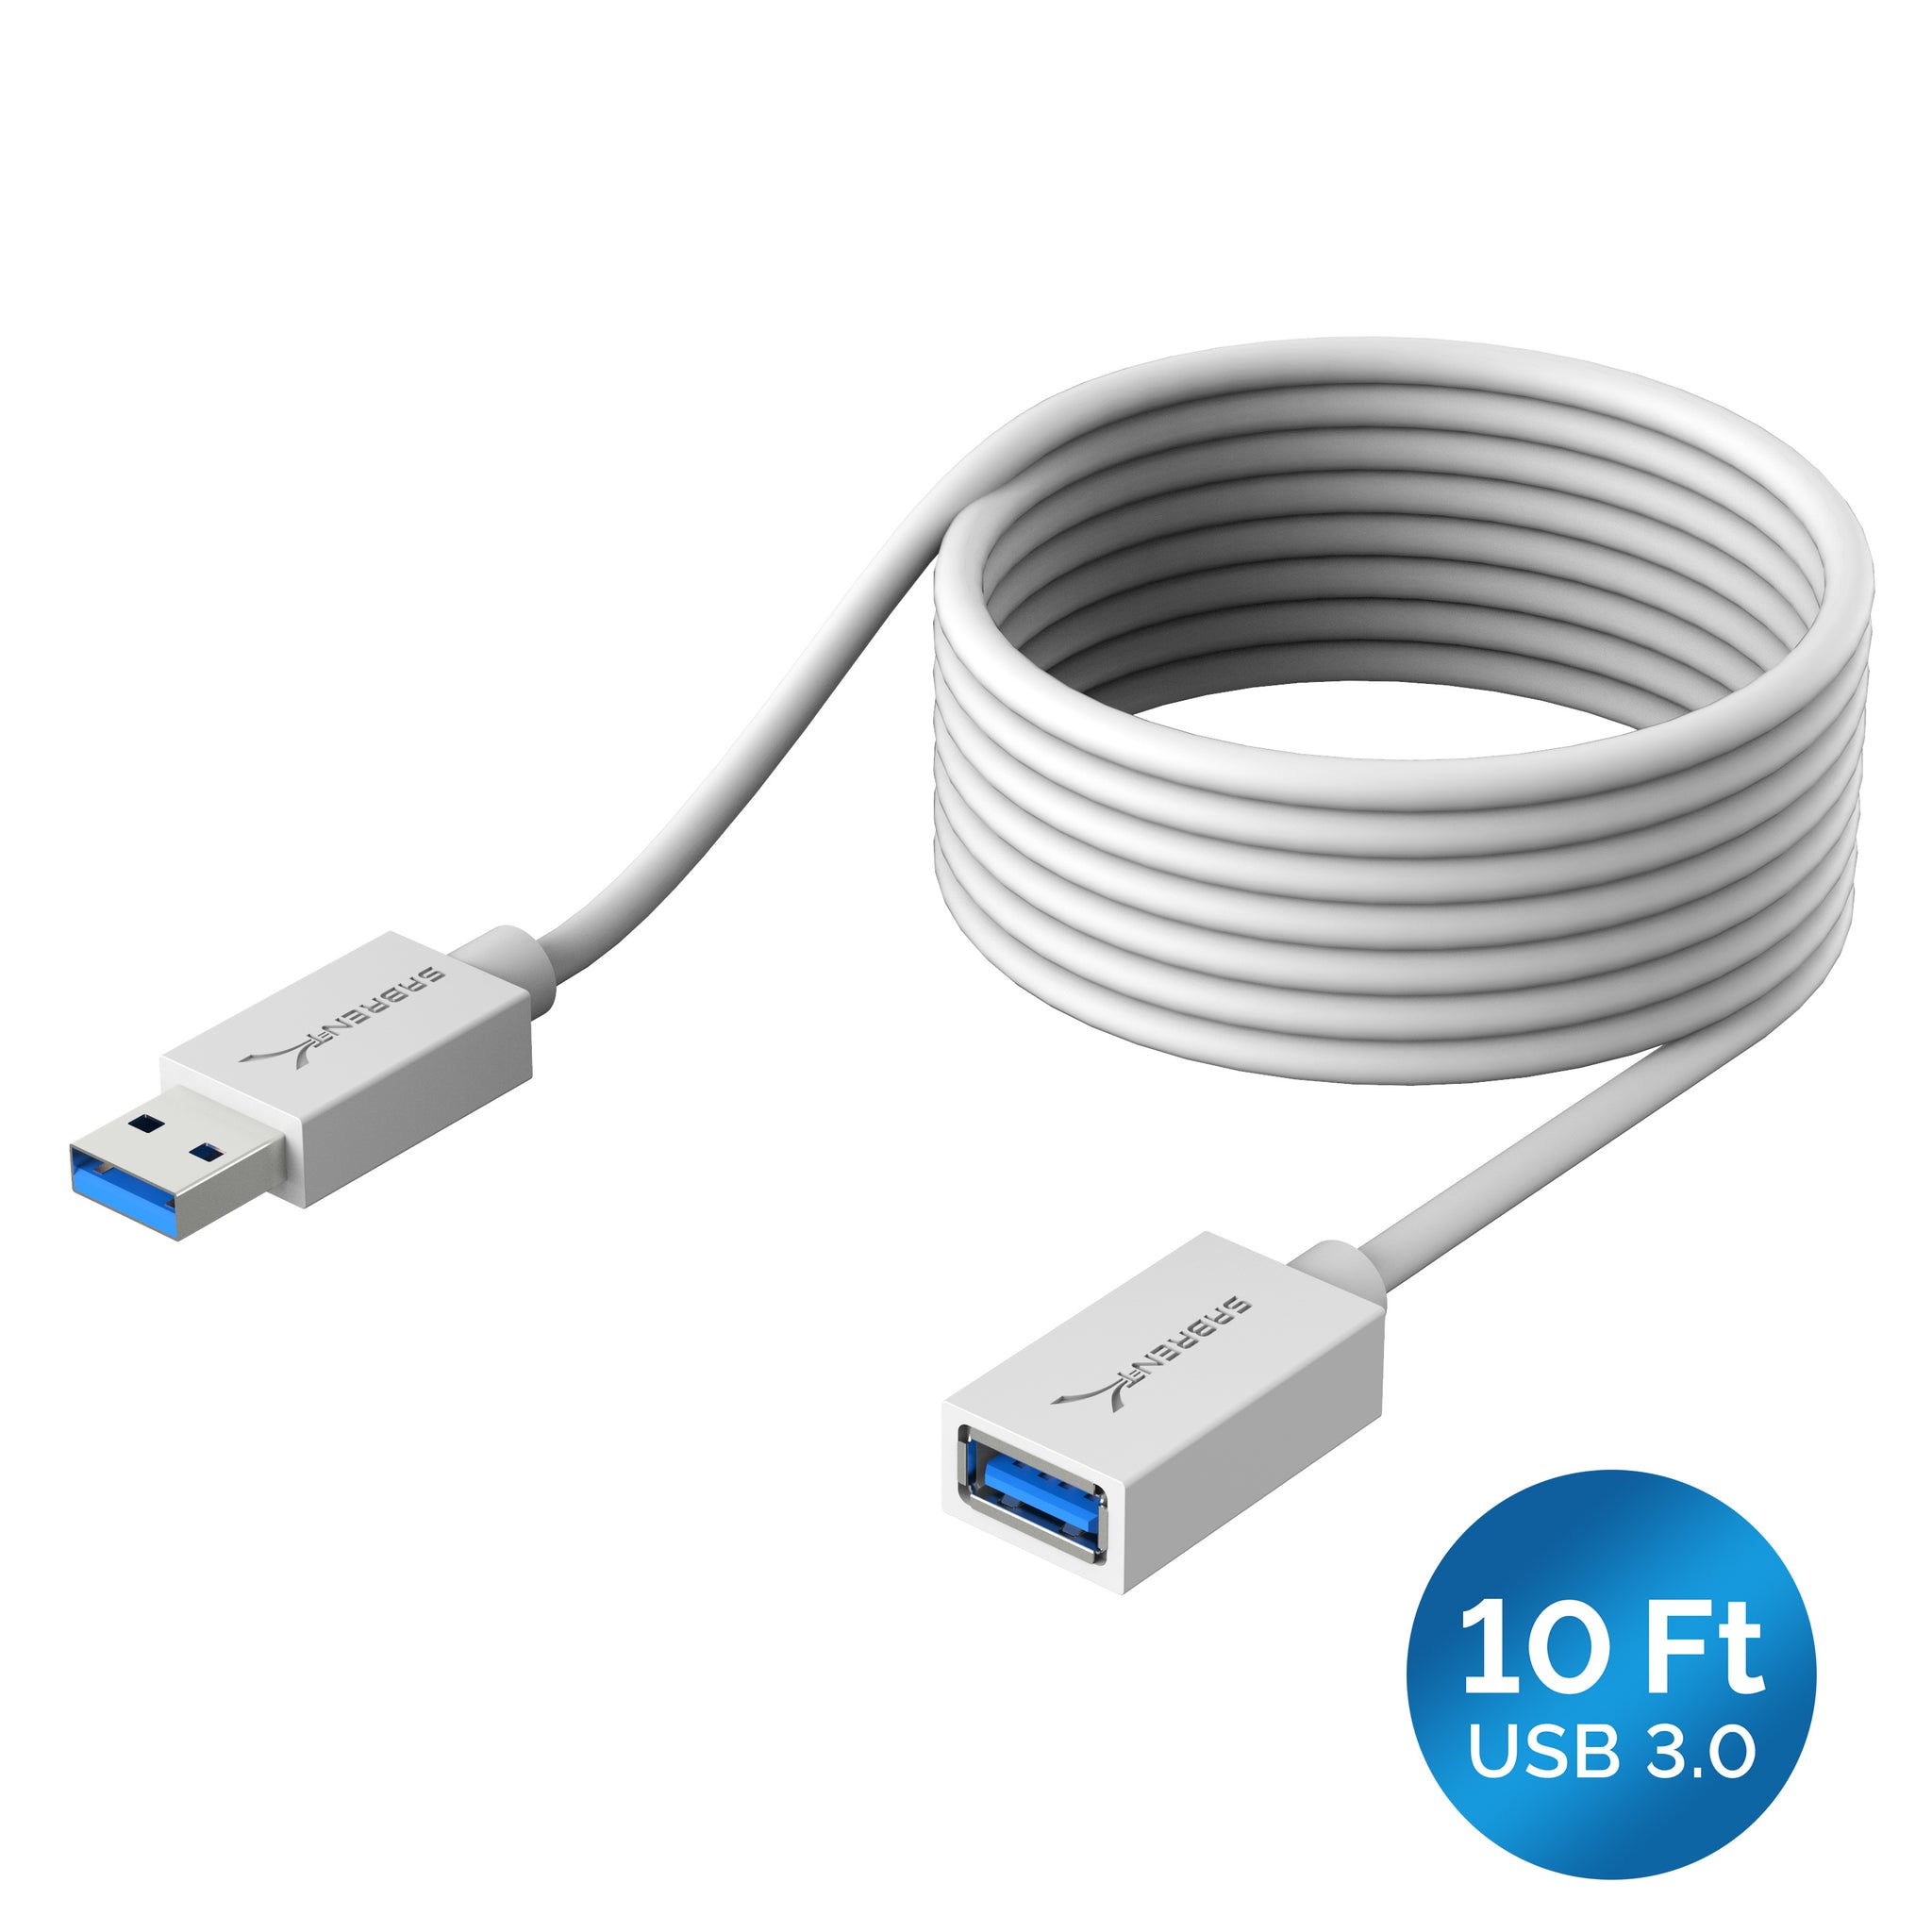 10 Foot USB 3.0 (USB 3.1 Gen 1) Type C Male to Type A Male